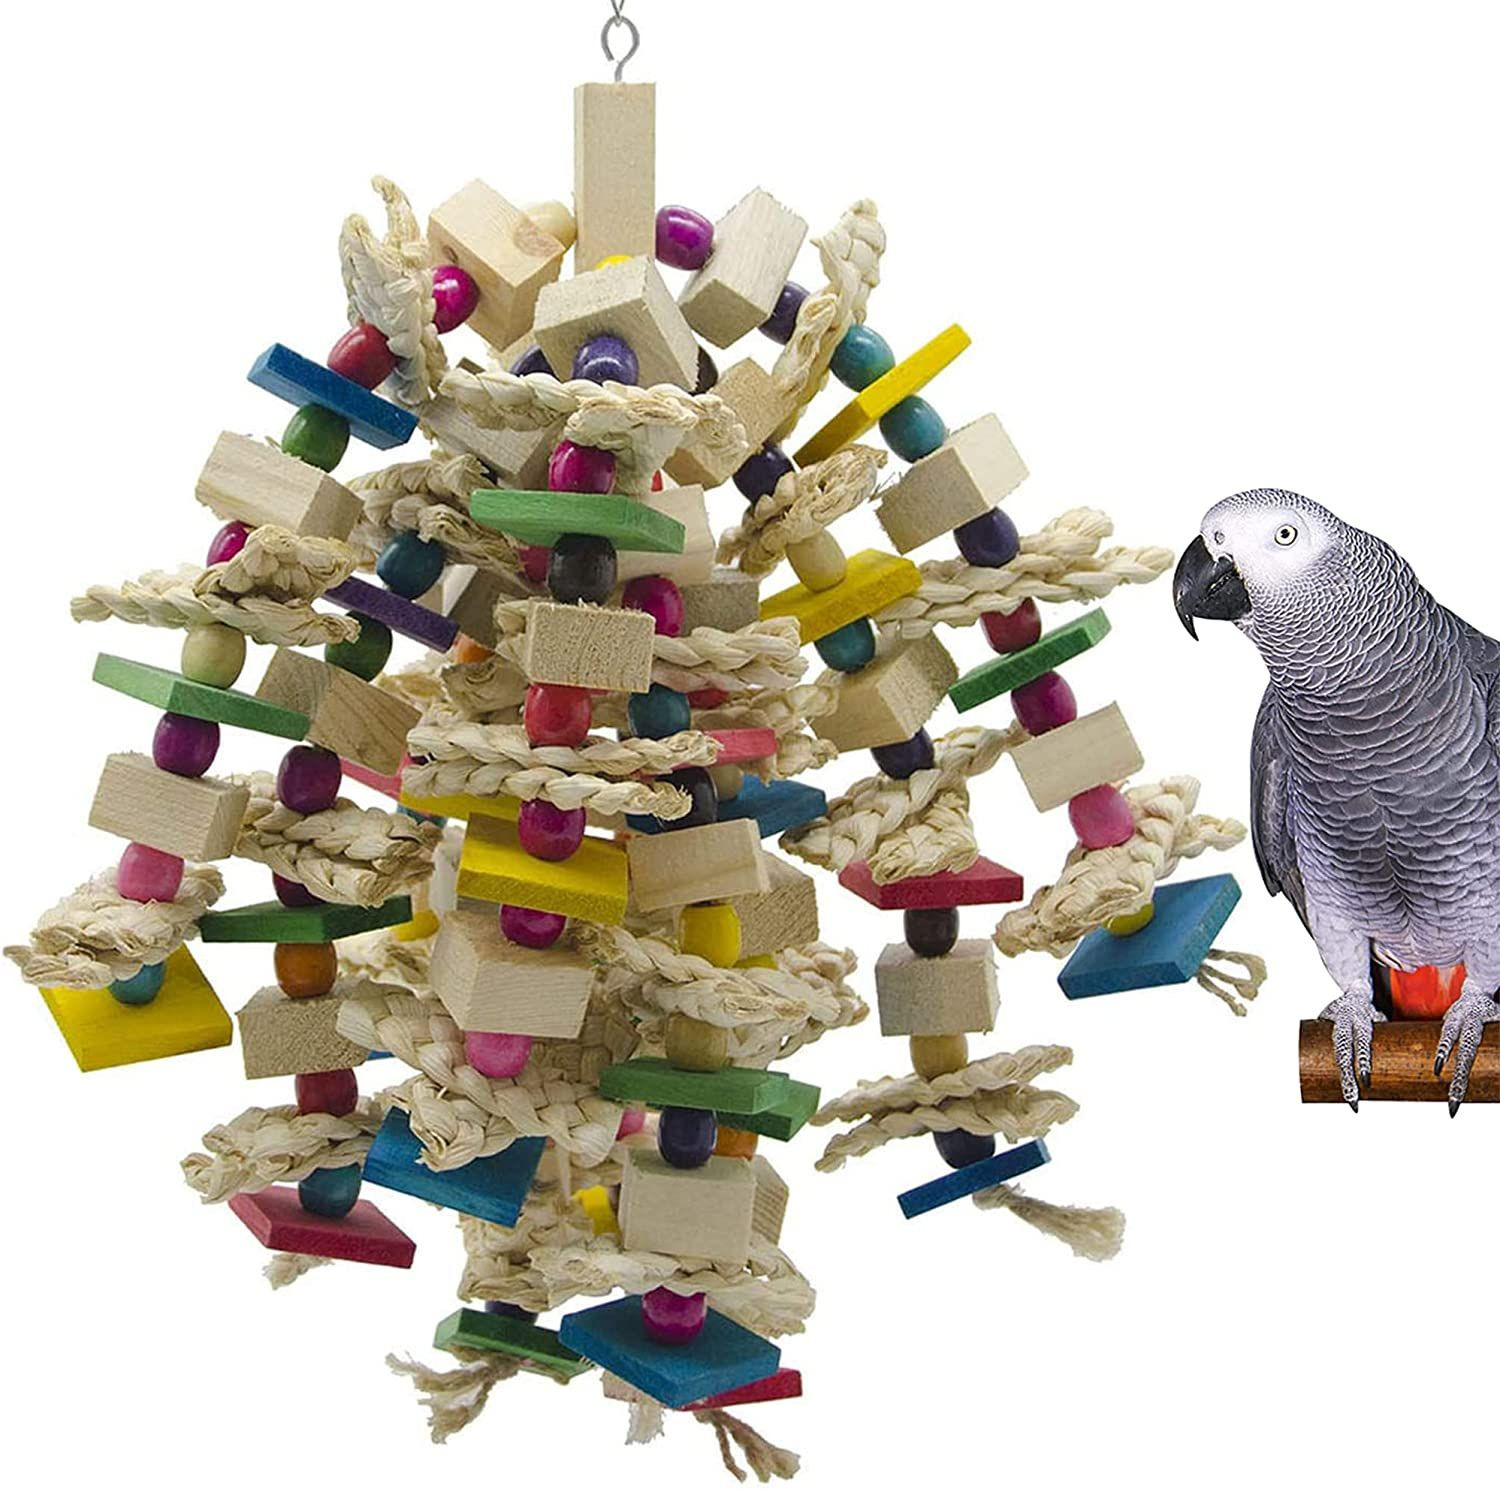 EBaokuup Large Parrot Chewing Toy - Bird Blocks Knots Tearing 